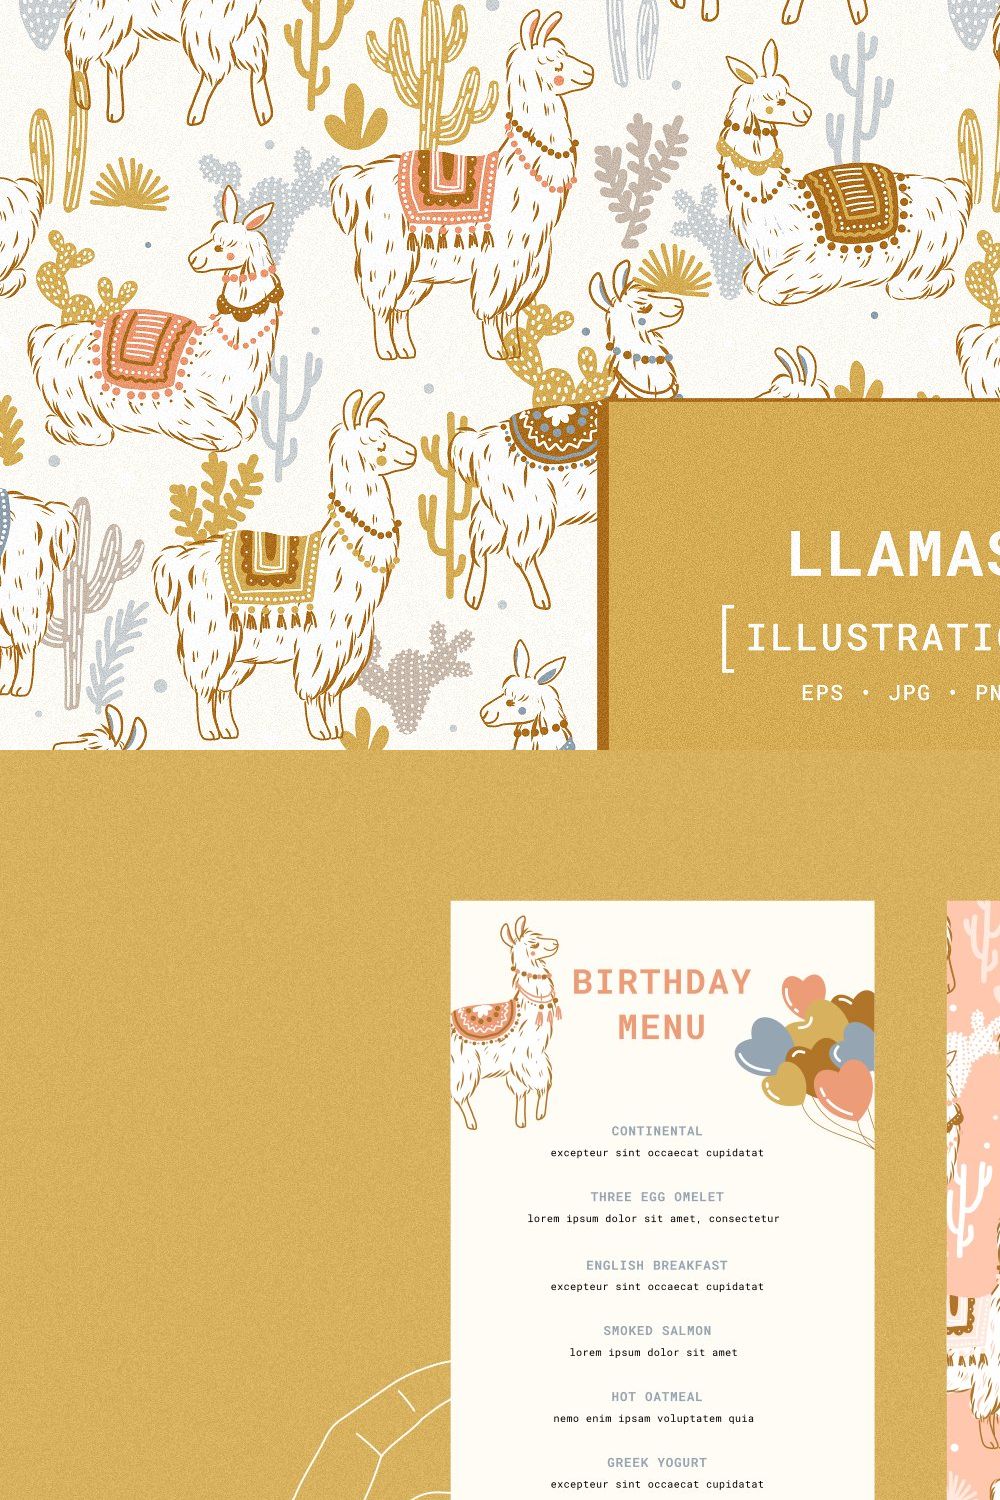 Llamas illustrations pinterest preview image.